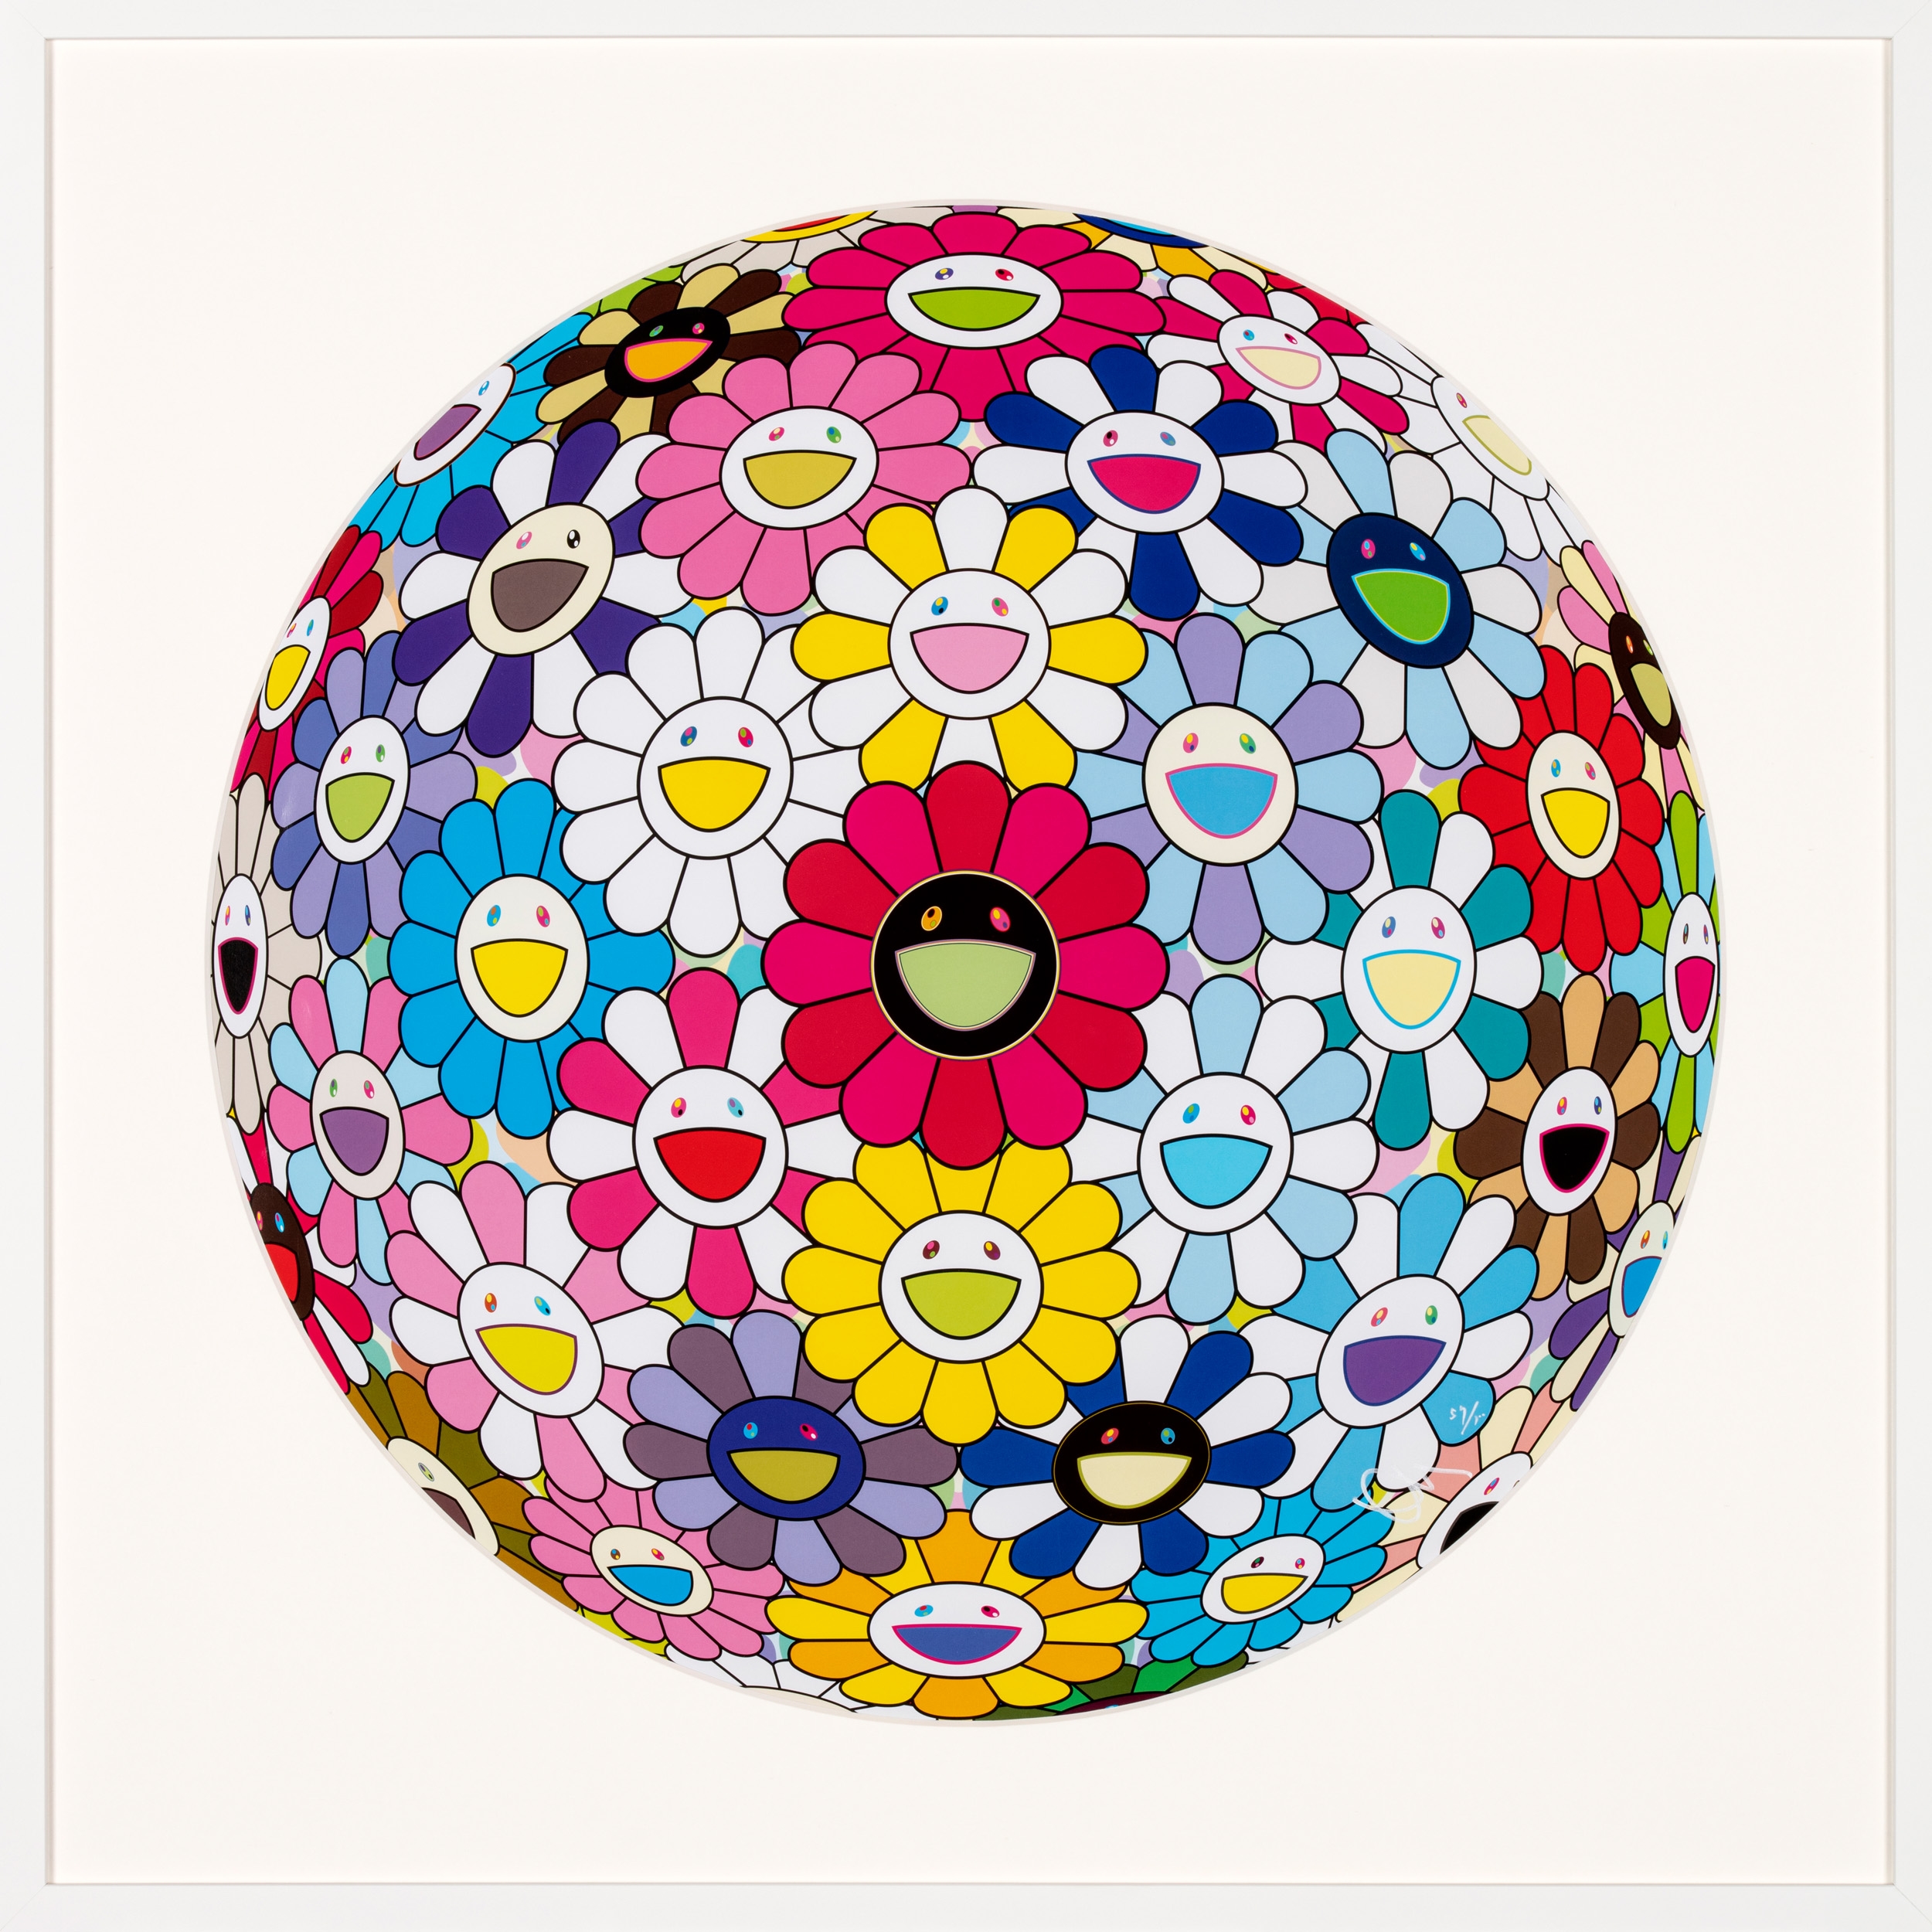 Takashi Murakami Flower Ball (Annular Solar Eclipse) Print